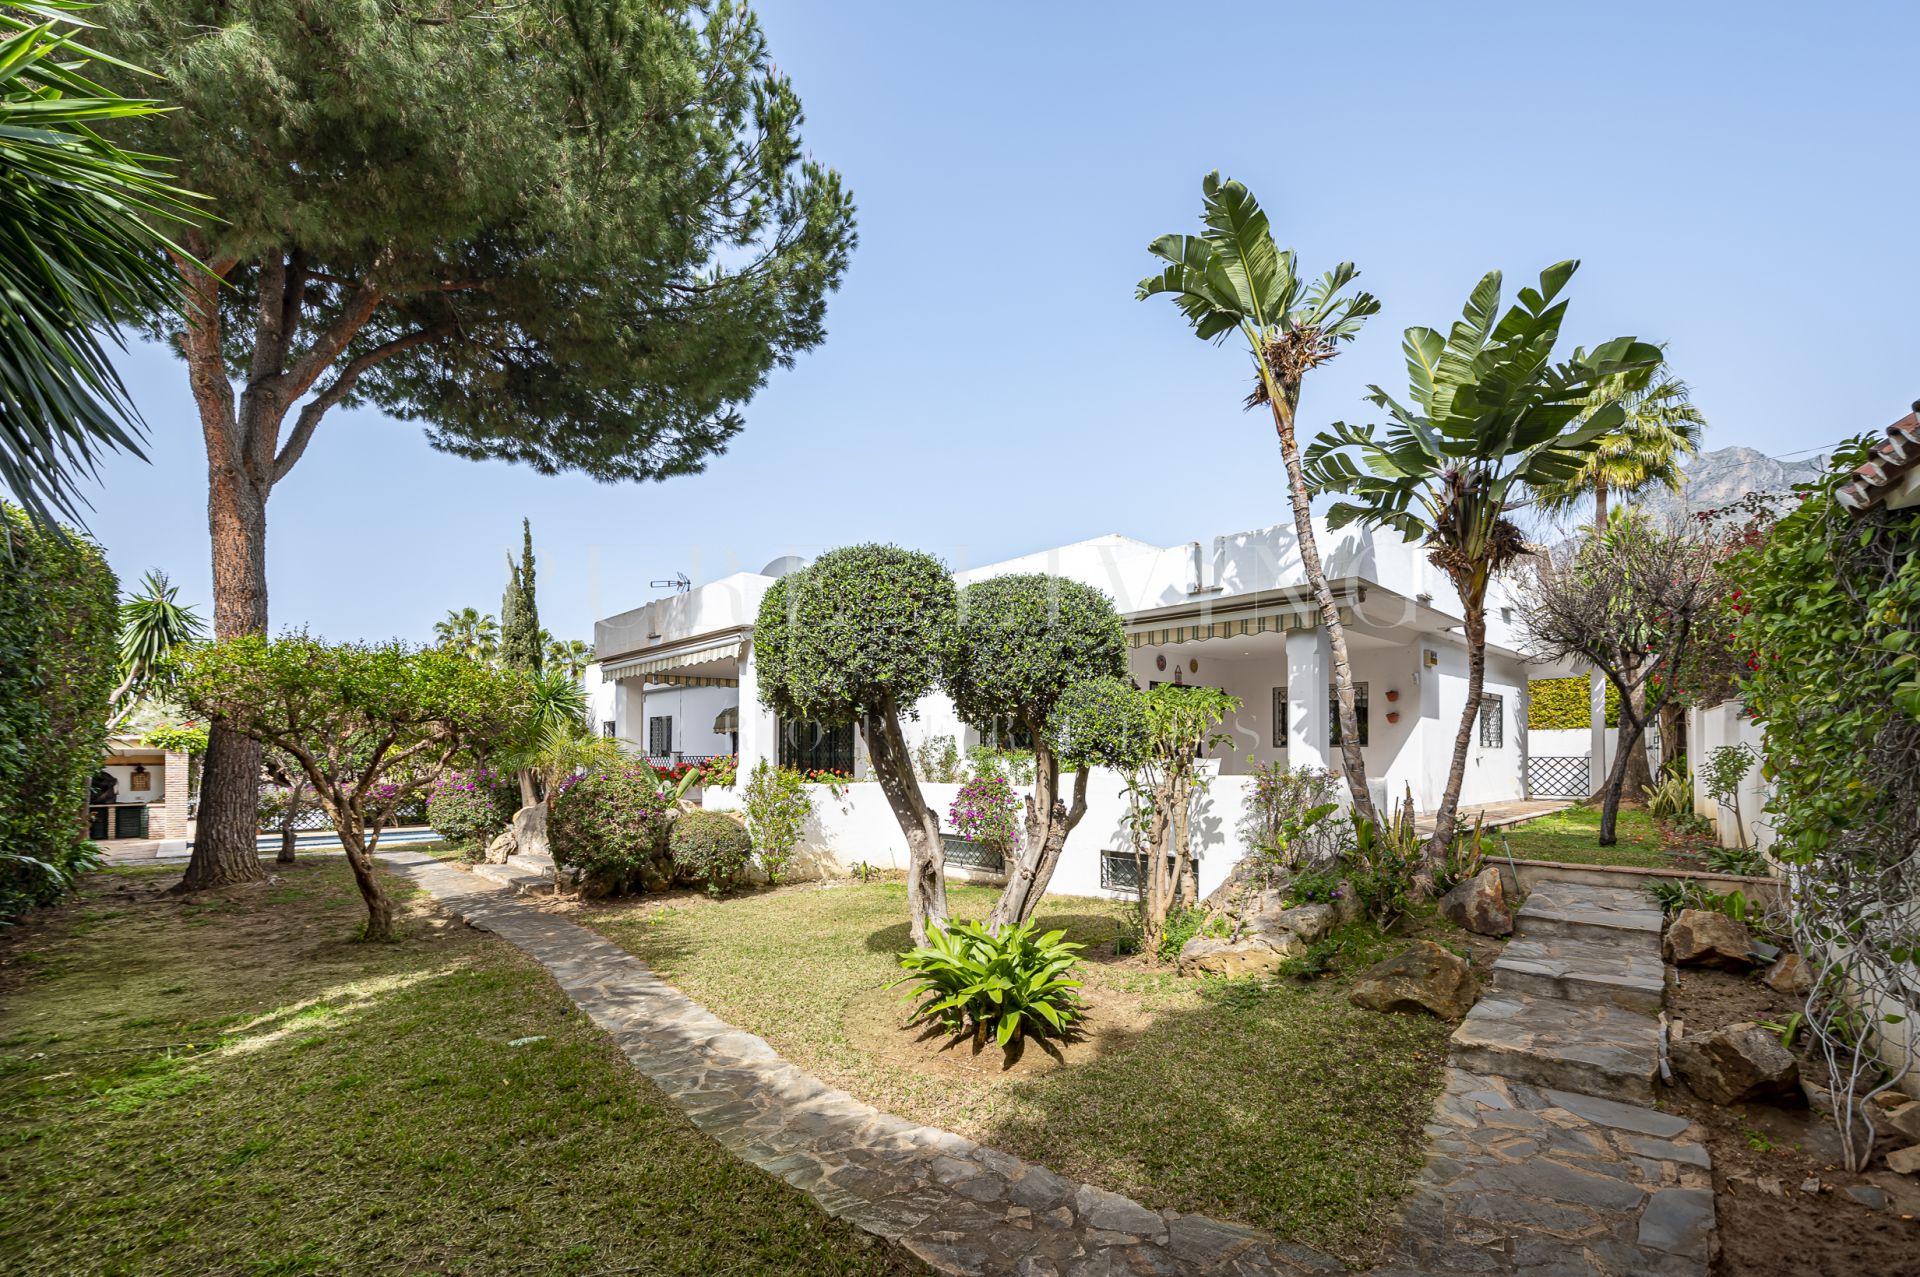 Villa Mediterranea de cinco dormitorios en Nagueles con gran potencial